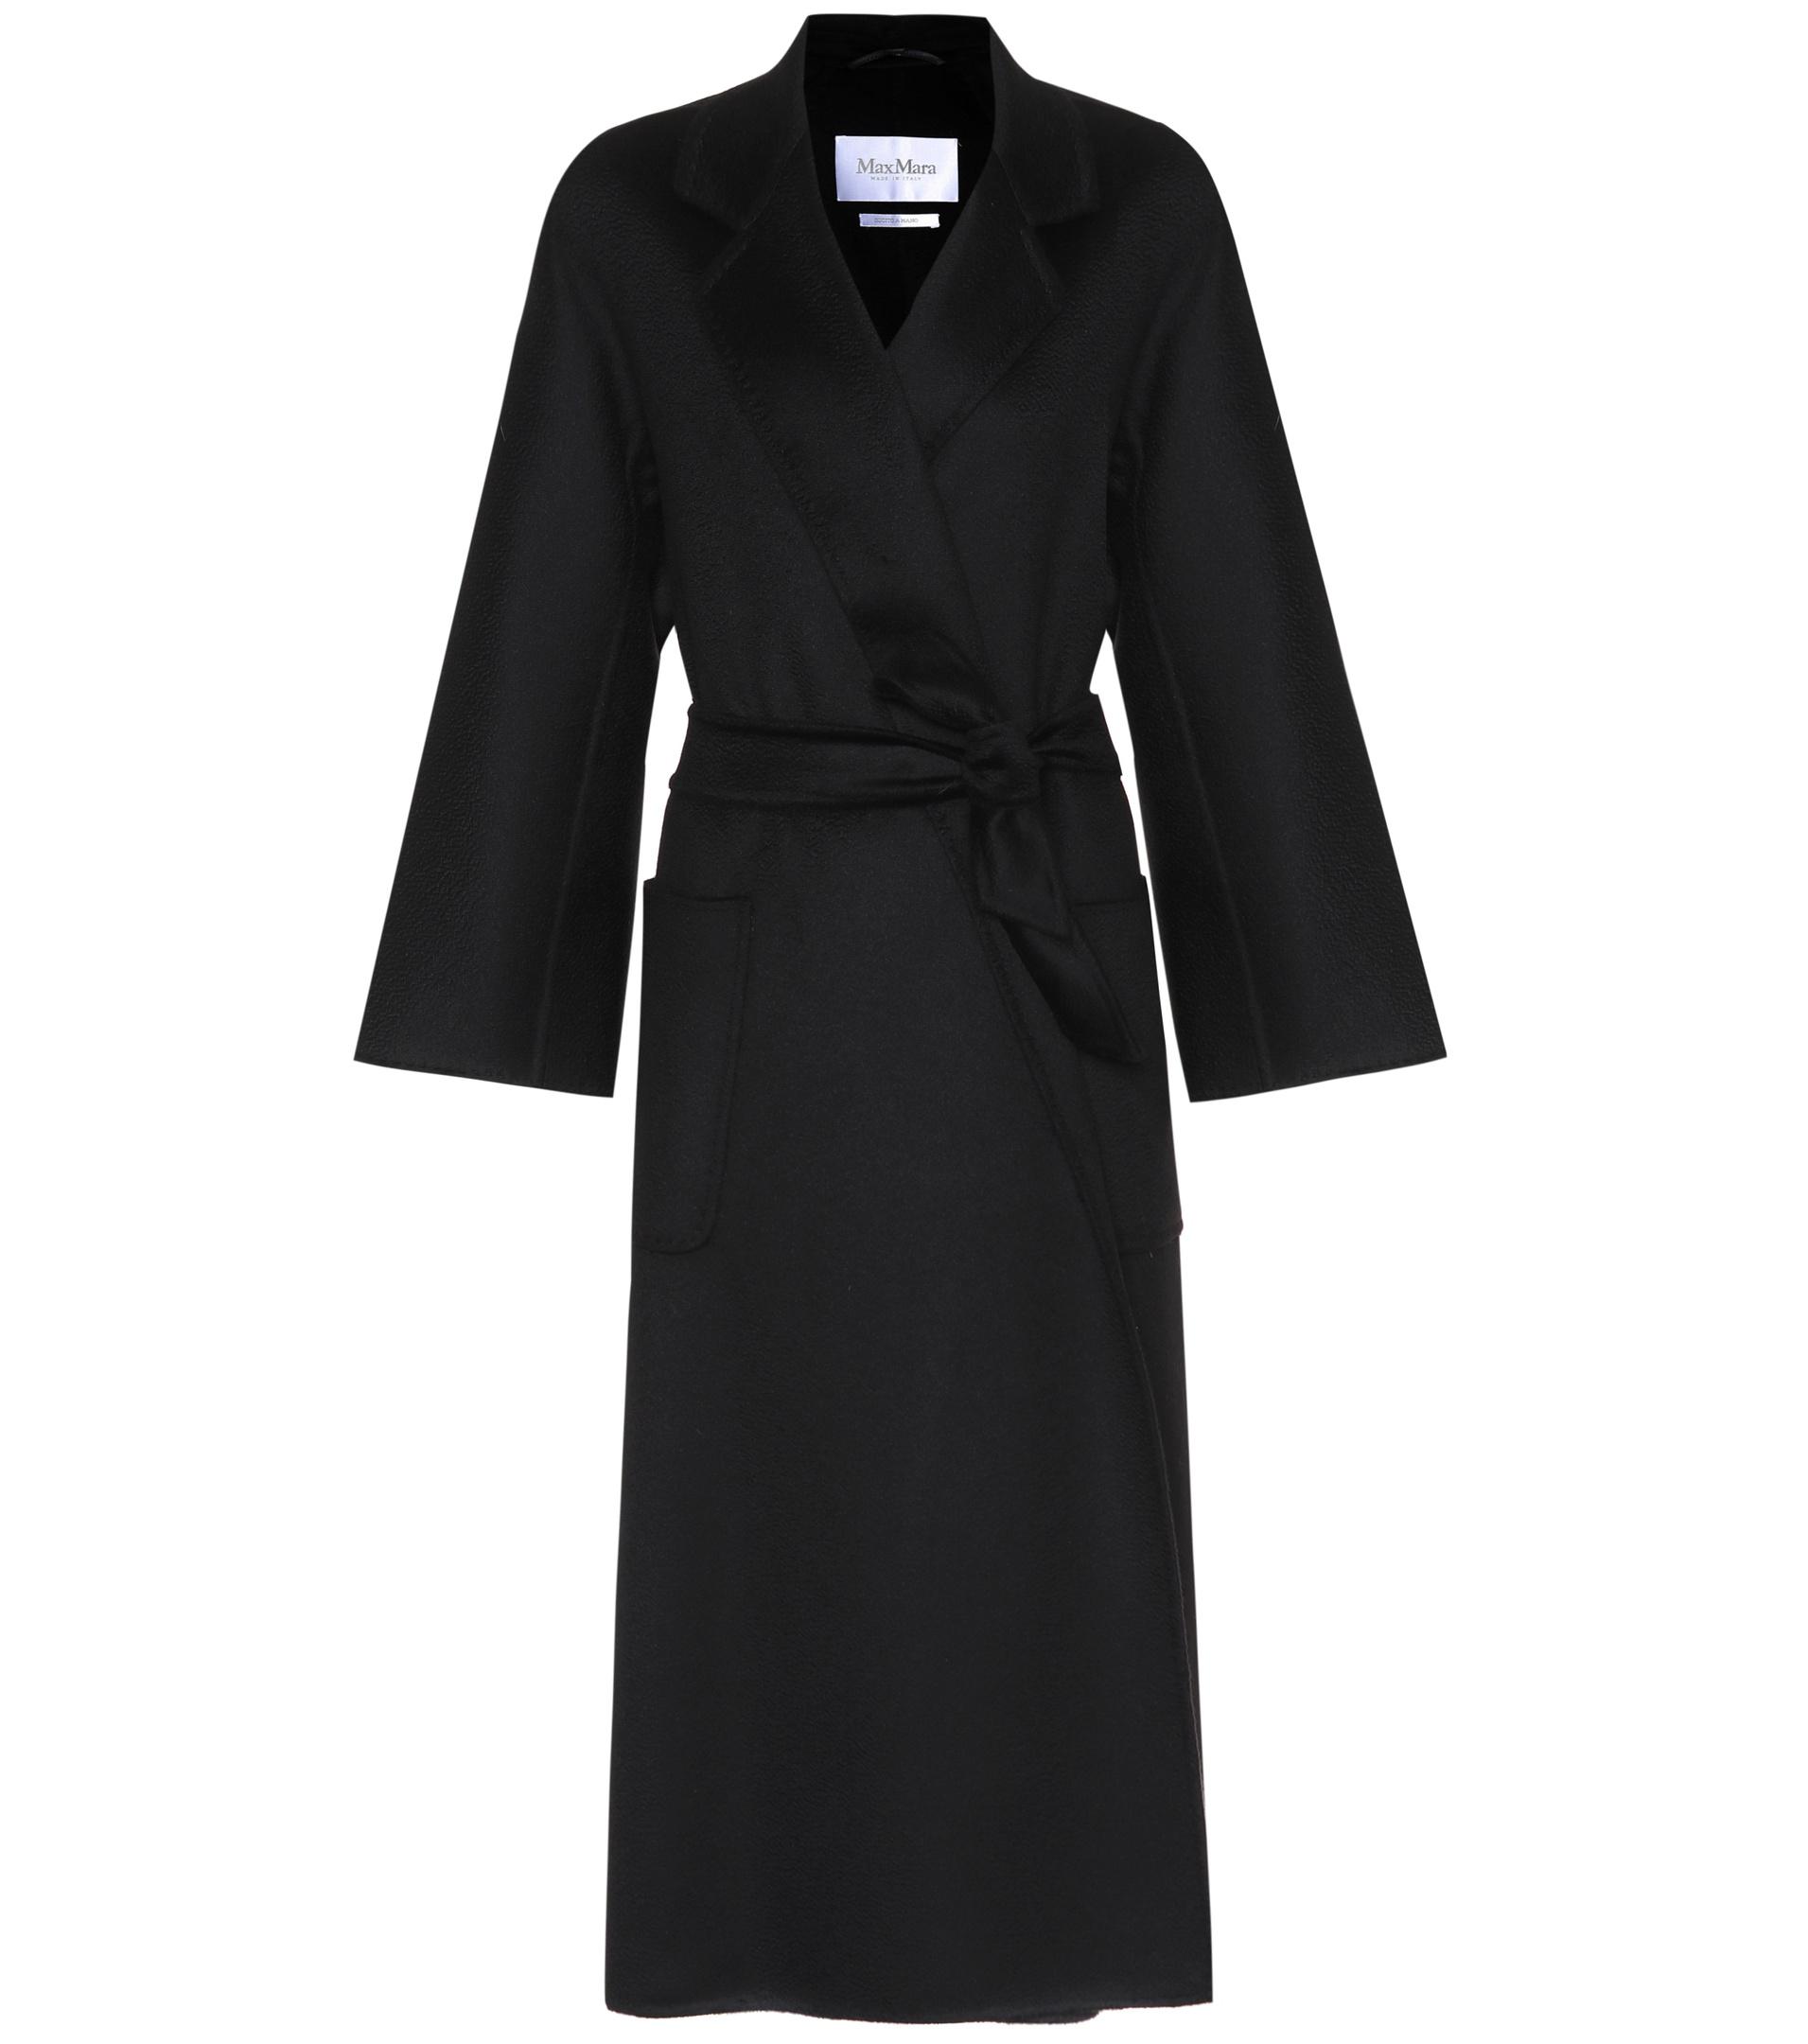 Max Mara Labbro Cashmere Coat in Black - Lyst